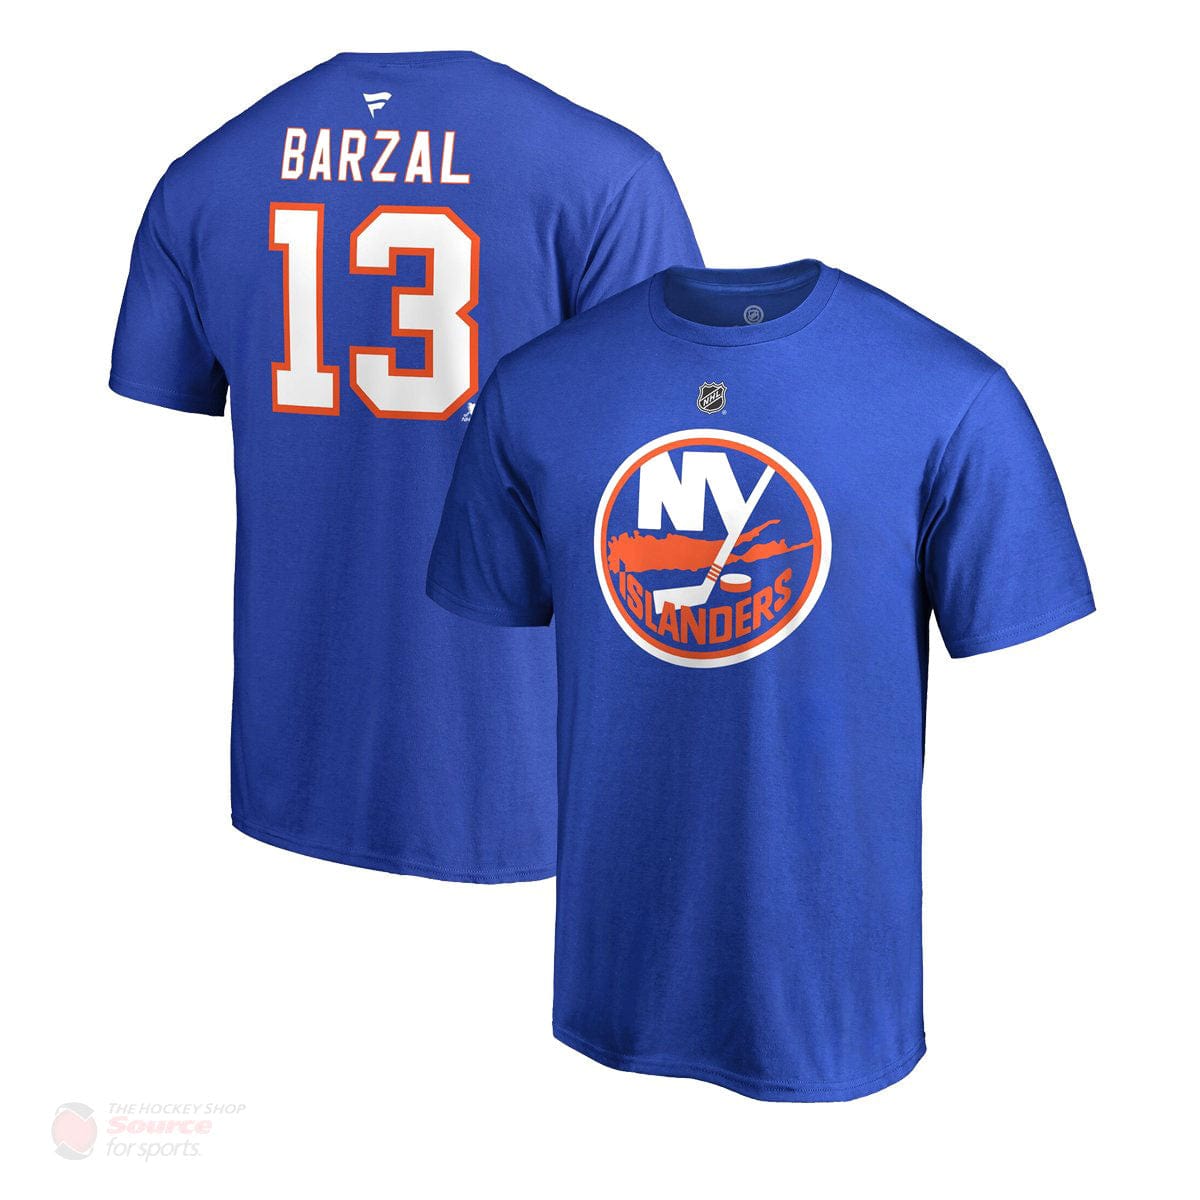 New York Islanders Fanatics Authentic Name & Number Mens Shirt - Matt Barzal